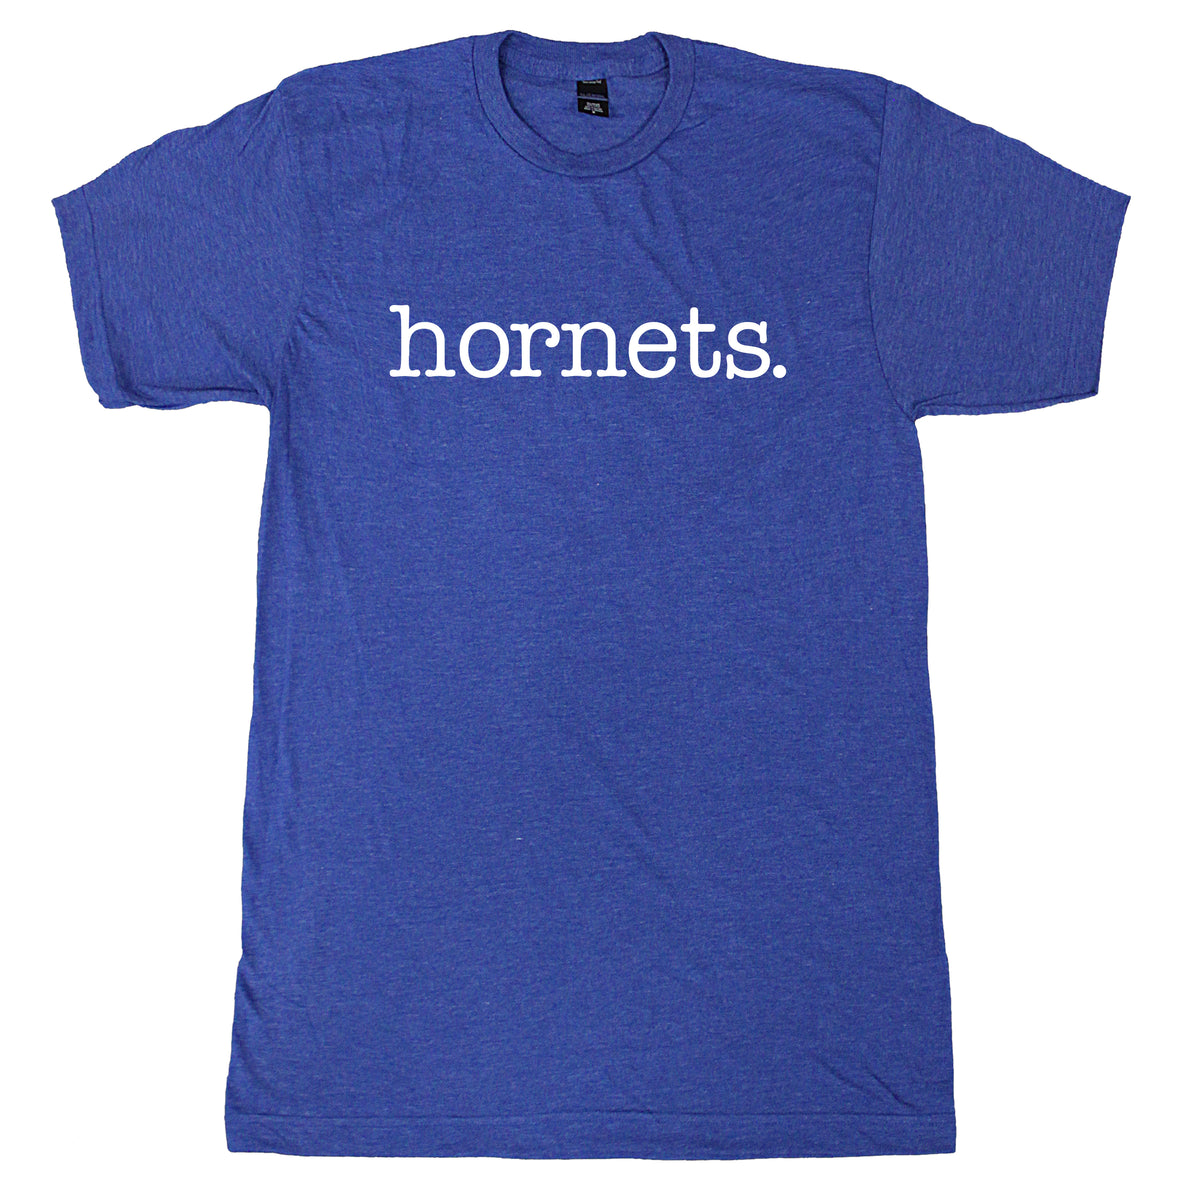 Bryant Hornets. Tee